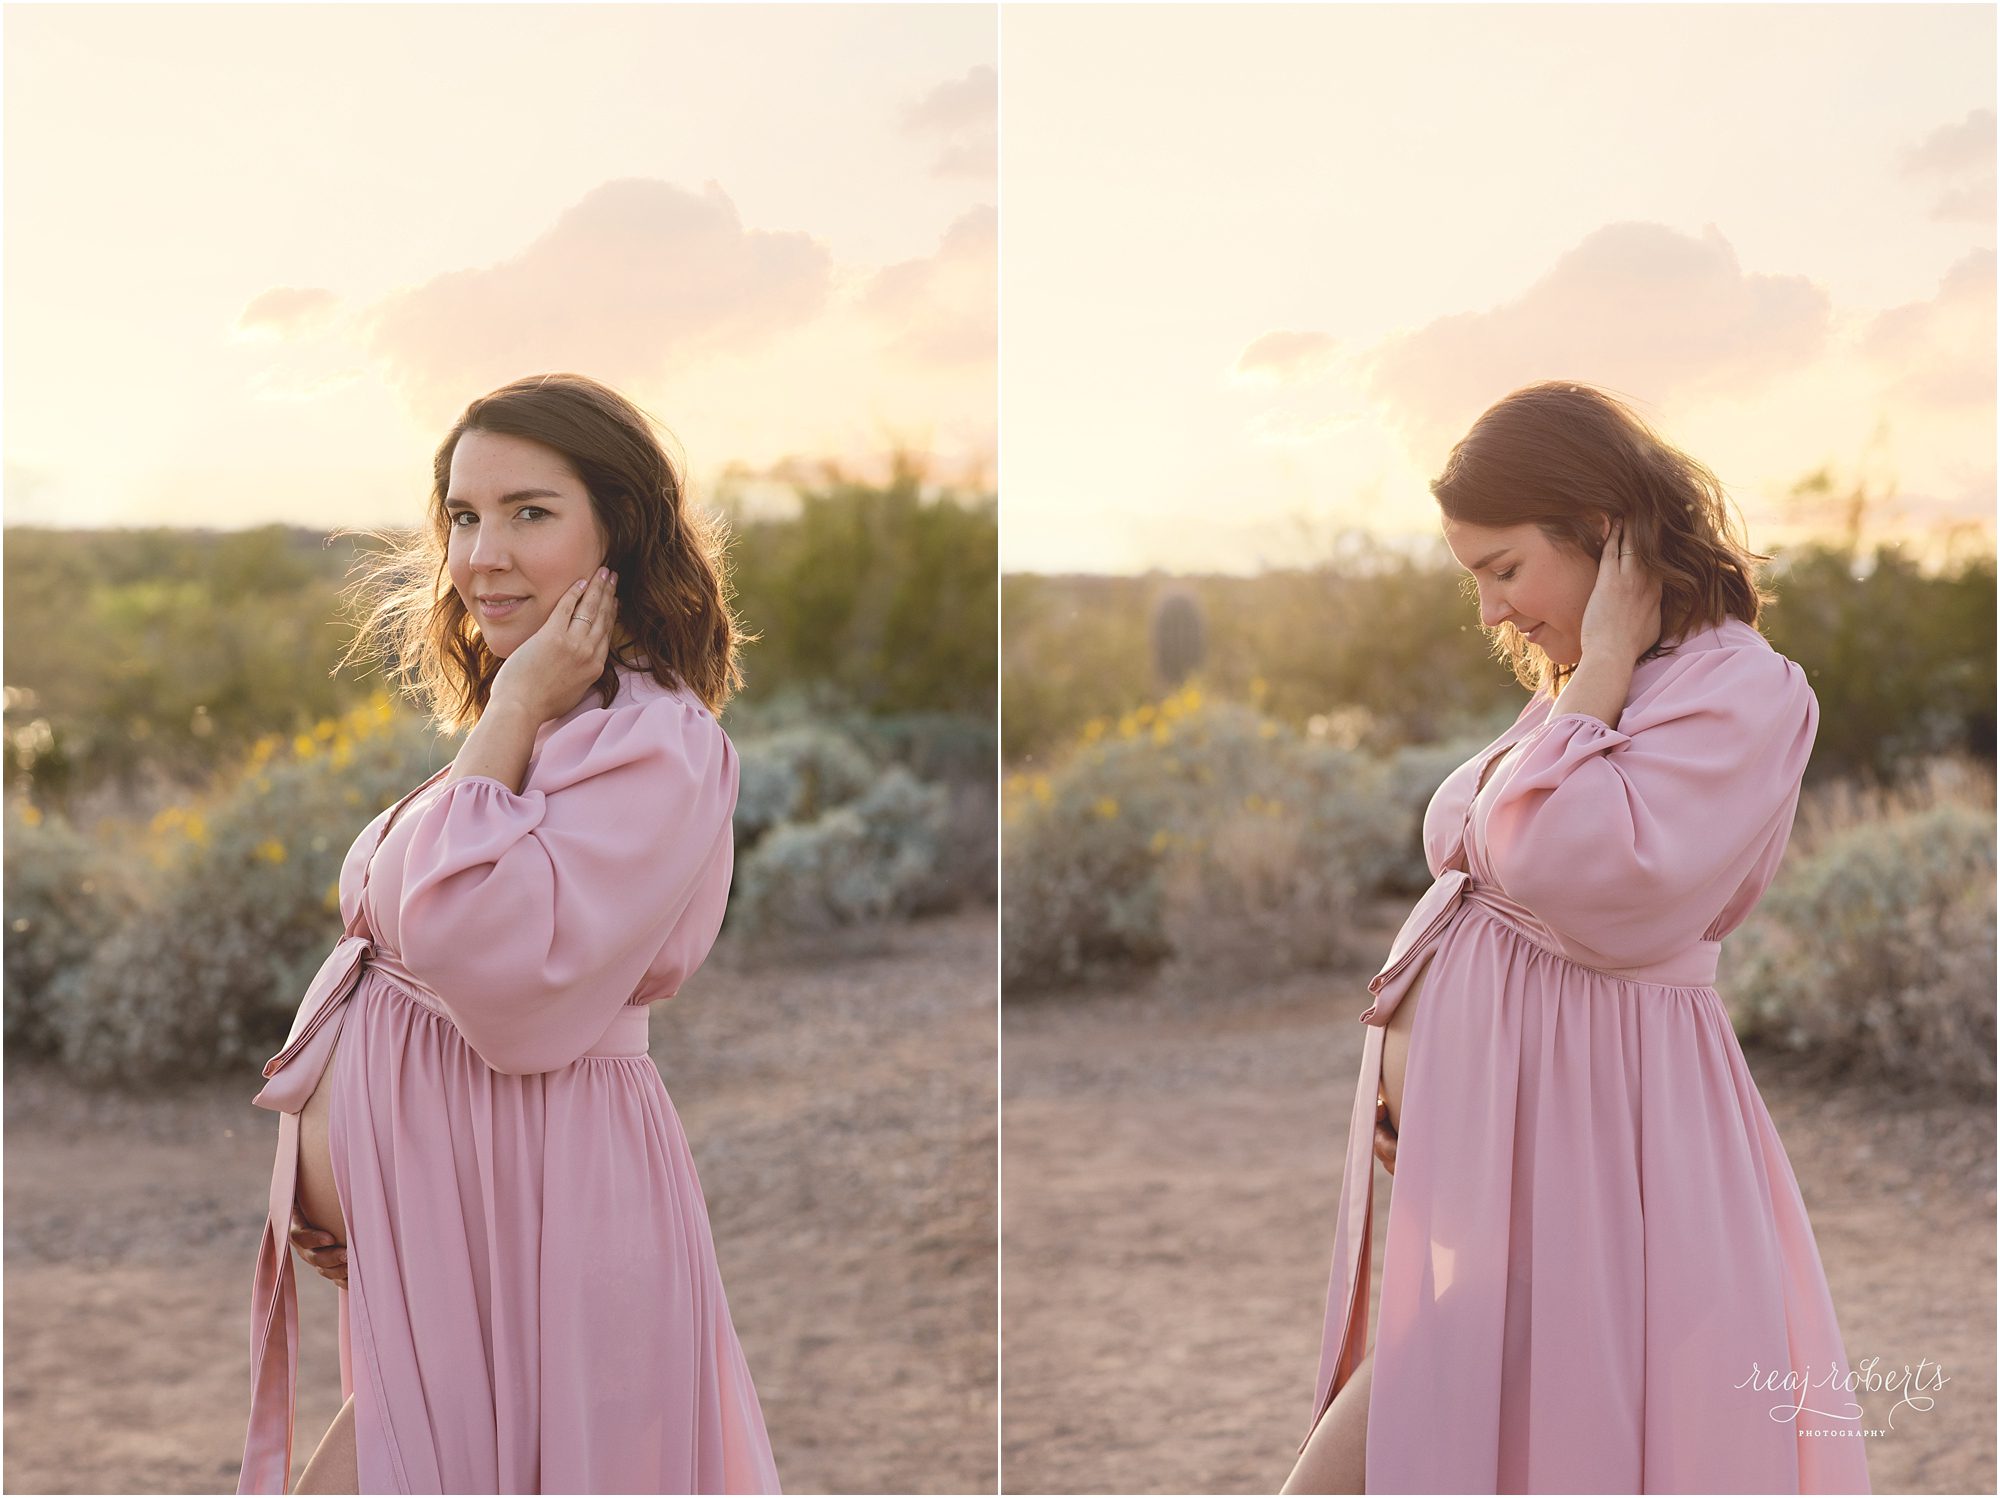 Maternity photos blush sunset desert | Reaj Roberts Photography